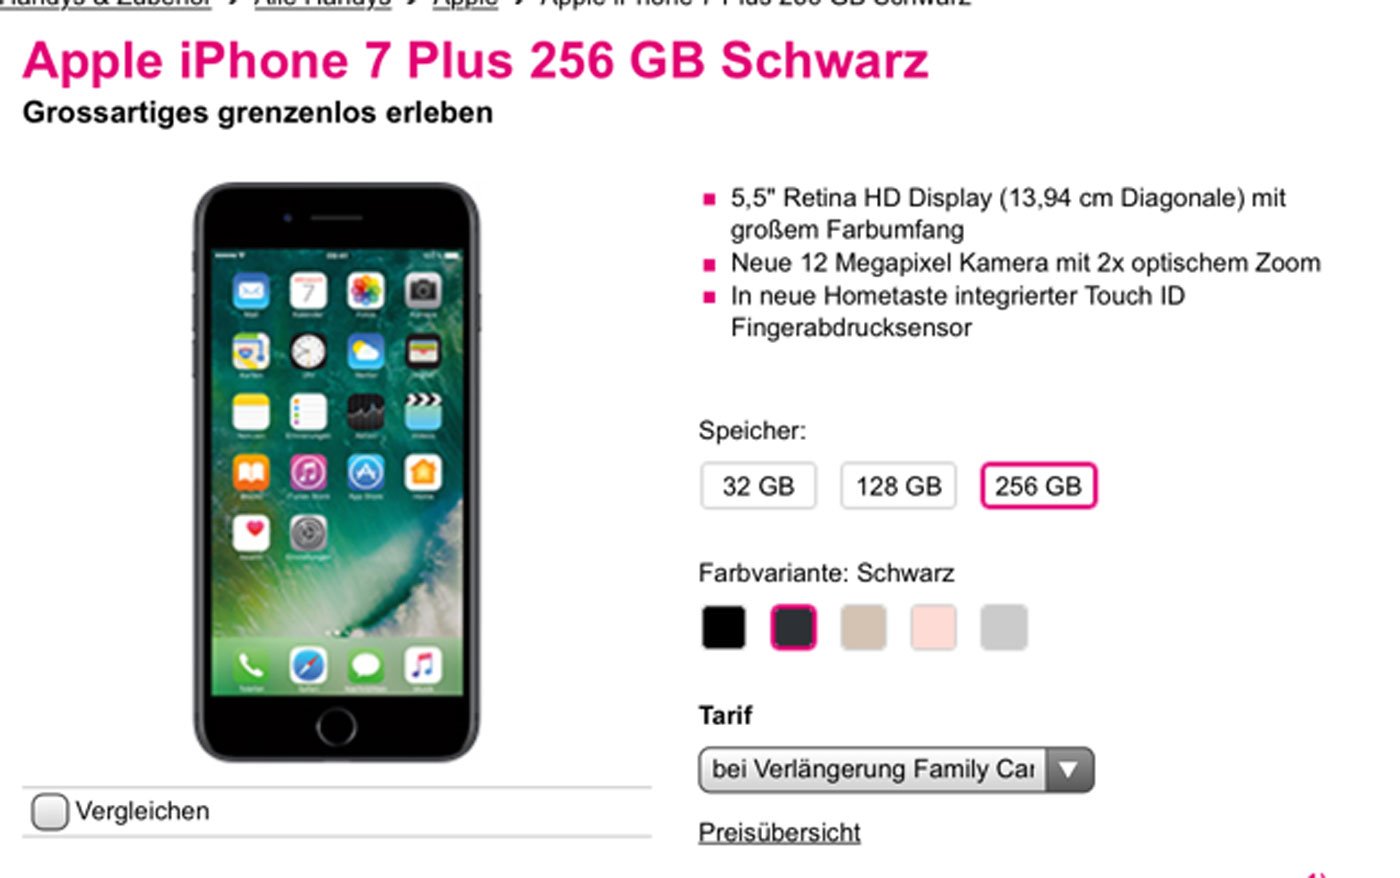 iPhone 7 Vertragsverlängerung (VVL) bei Telekom bereits möglich! 1